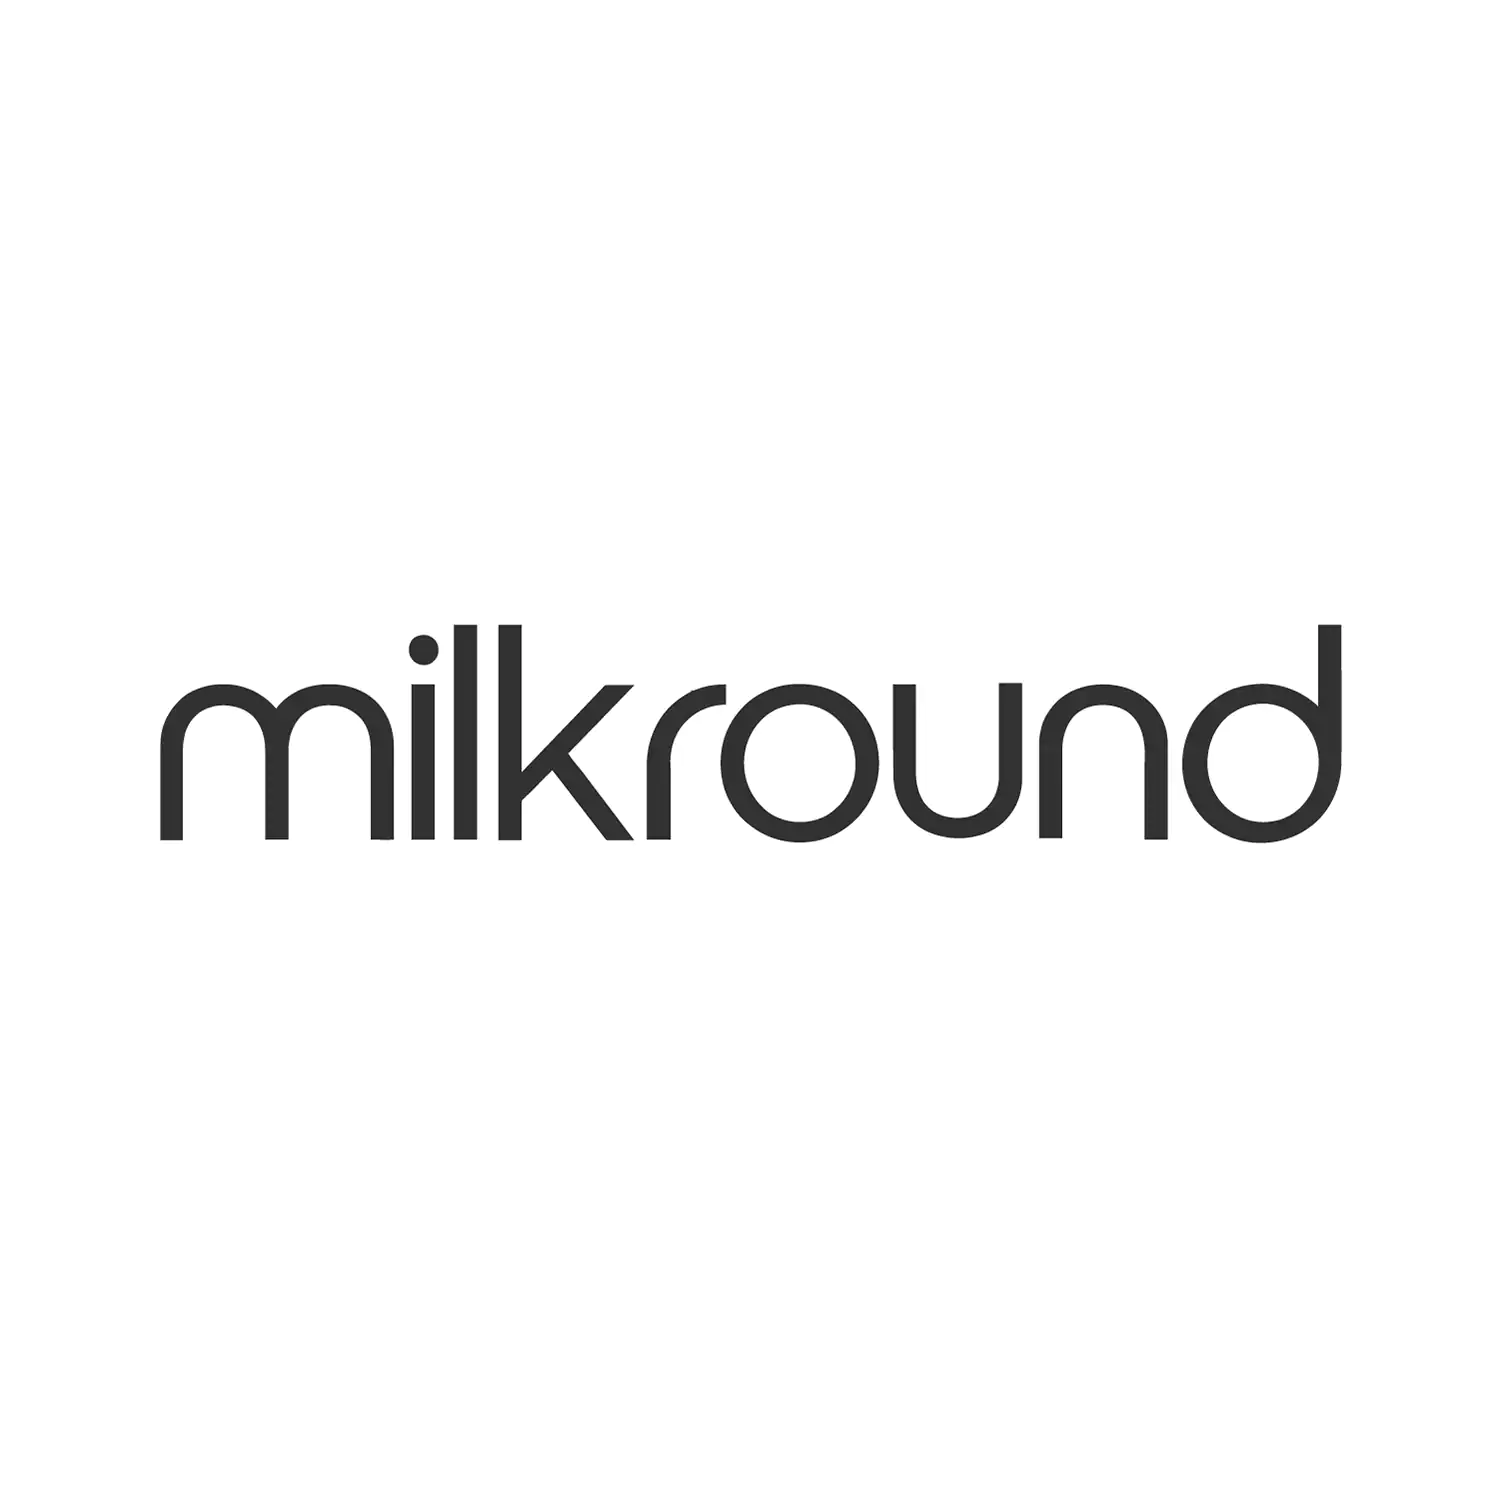 milkround graduate jobs